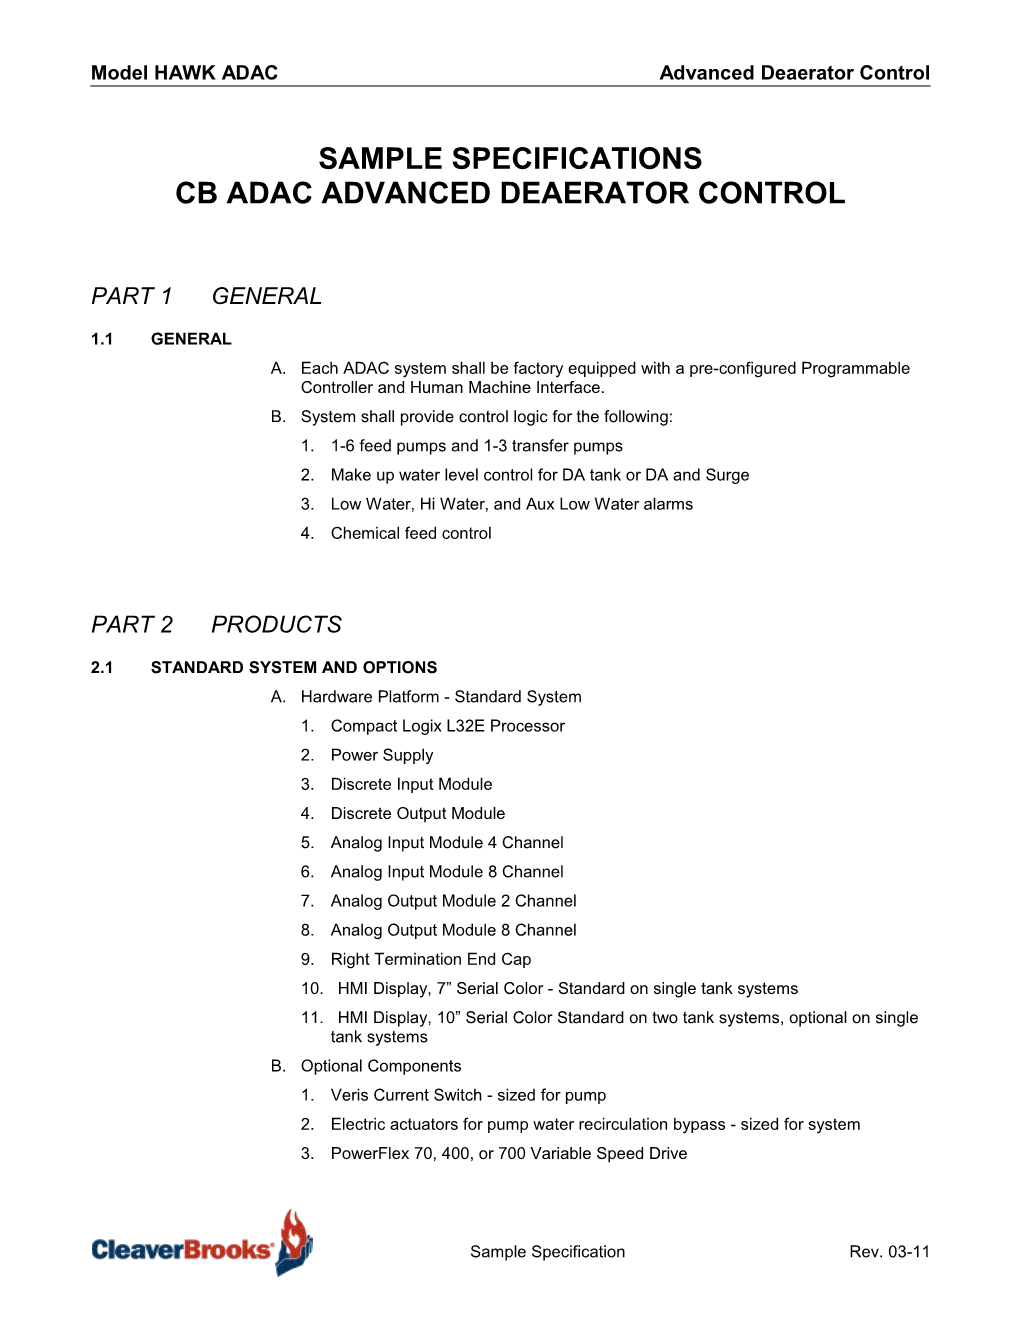 Sample Specifications CB ADAC Advanced Deaerator Control